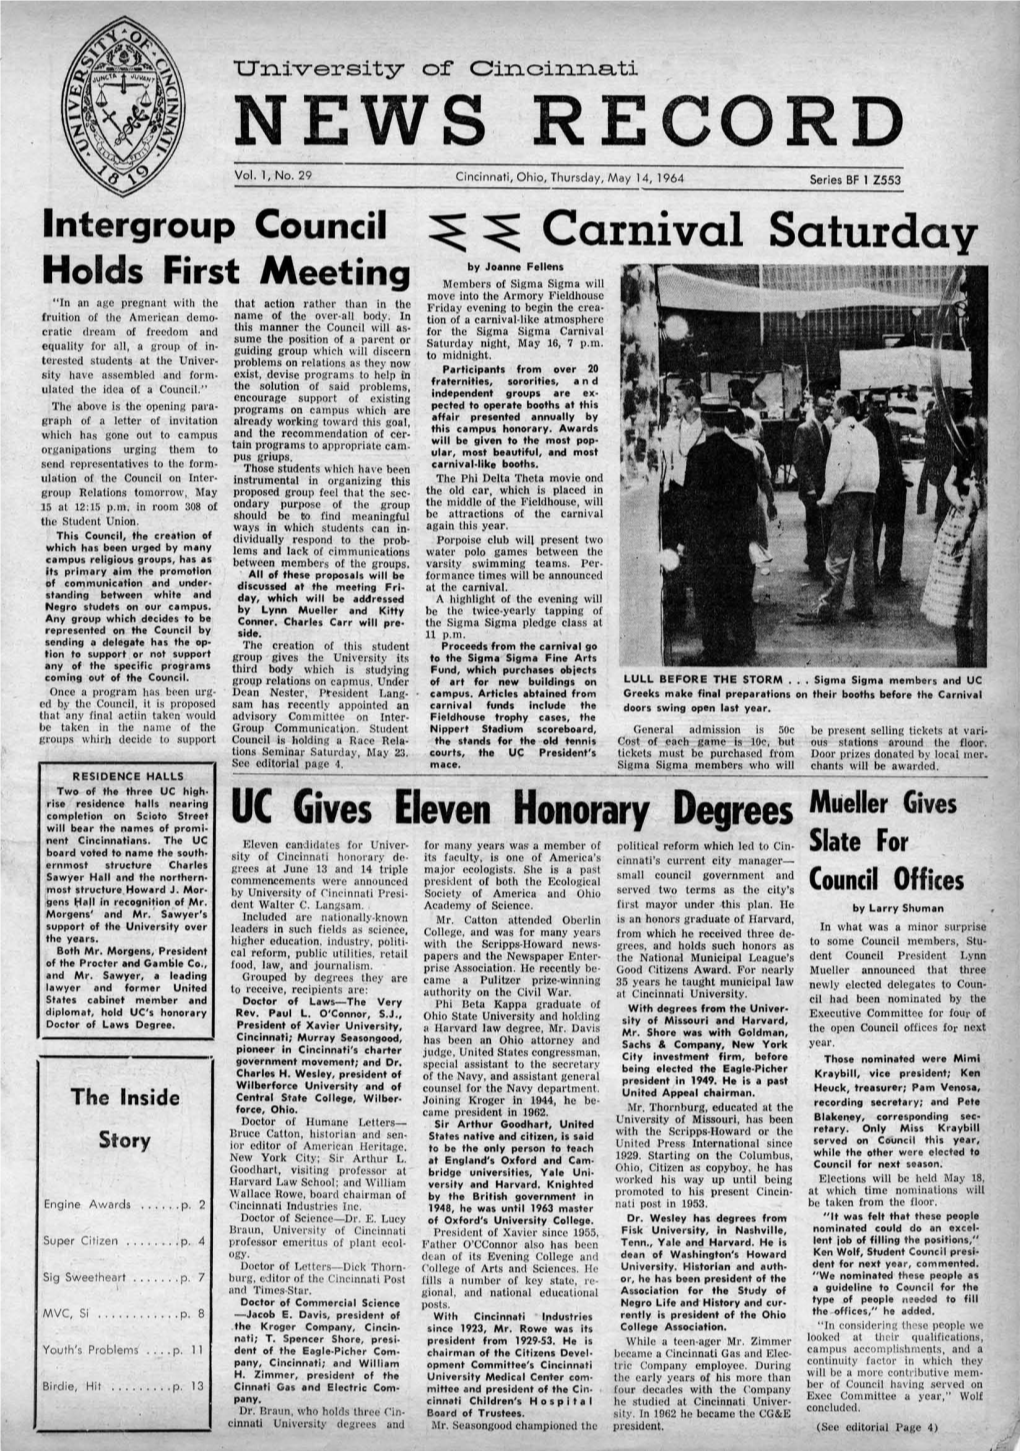 University of Cincinnati News Record. Thursday, May 14, 1964. Vol. L